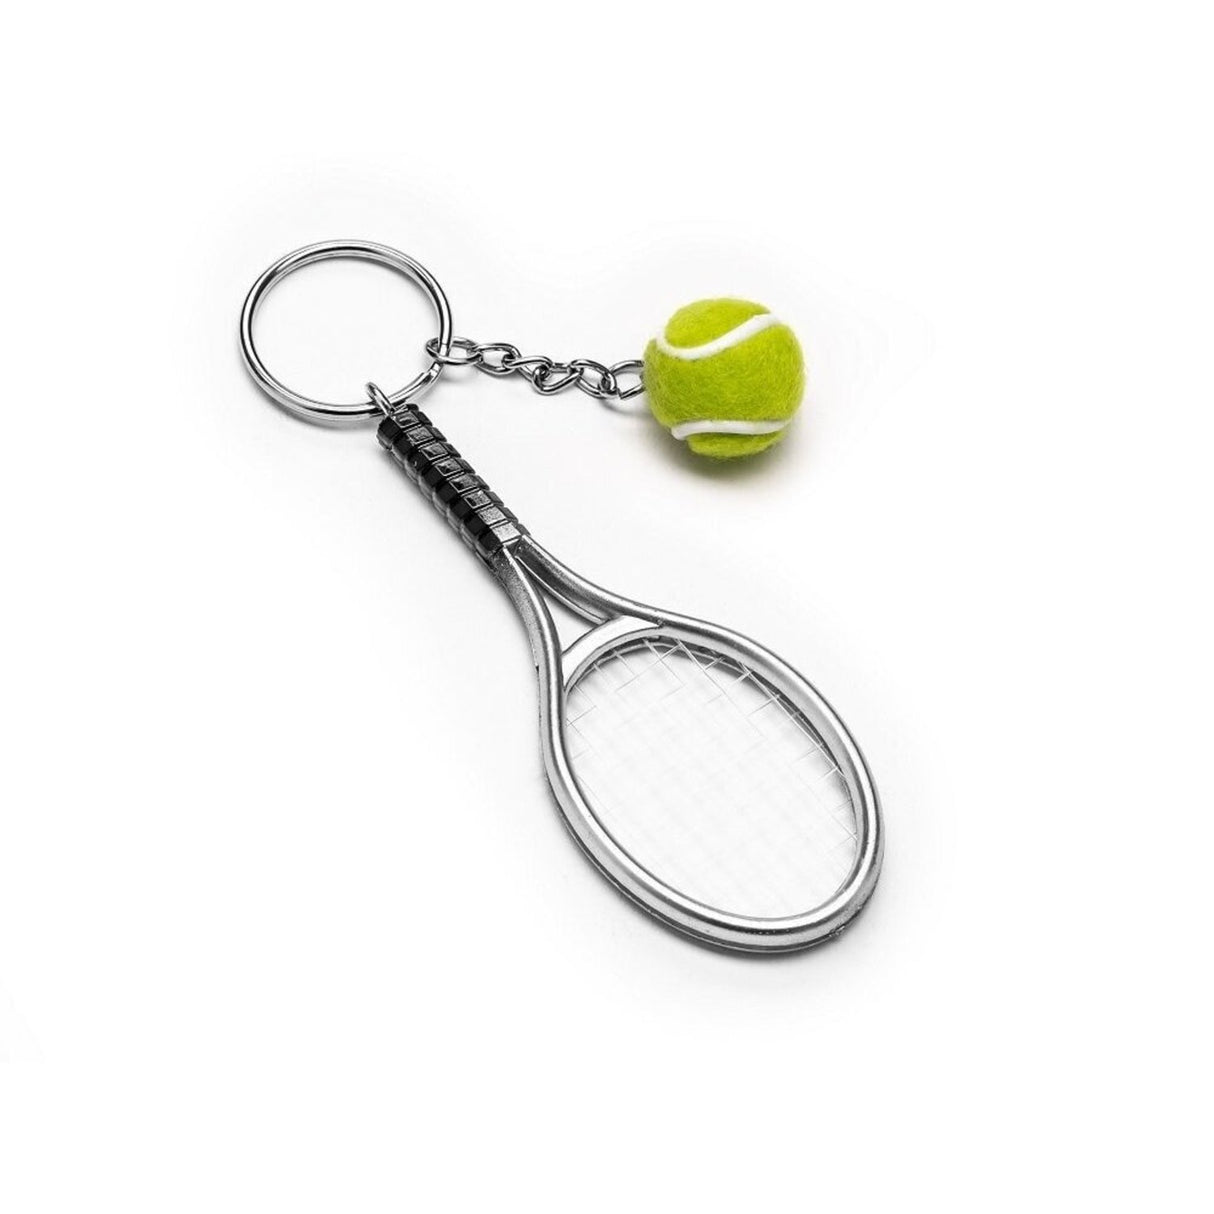 Tennisschläger Schlüsselanhänger mit Ball